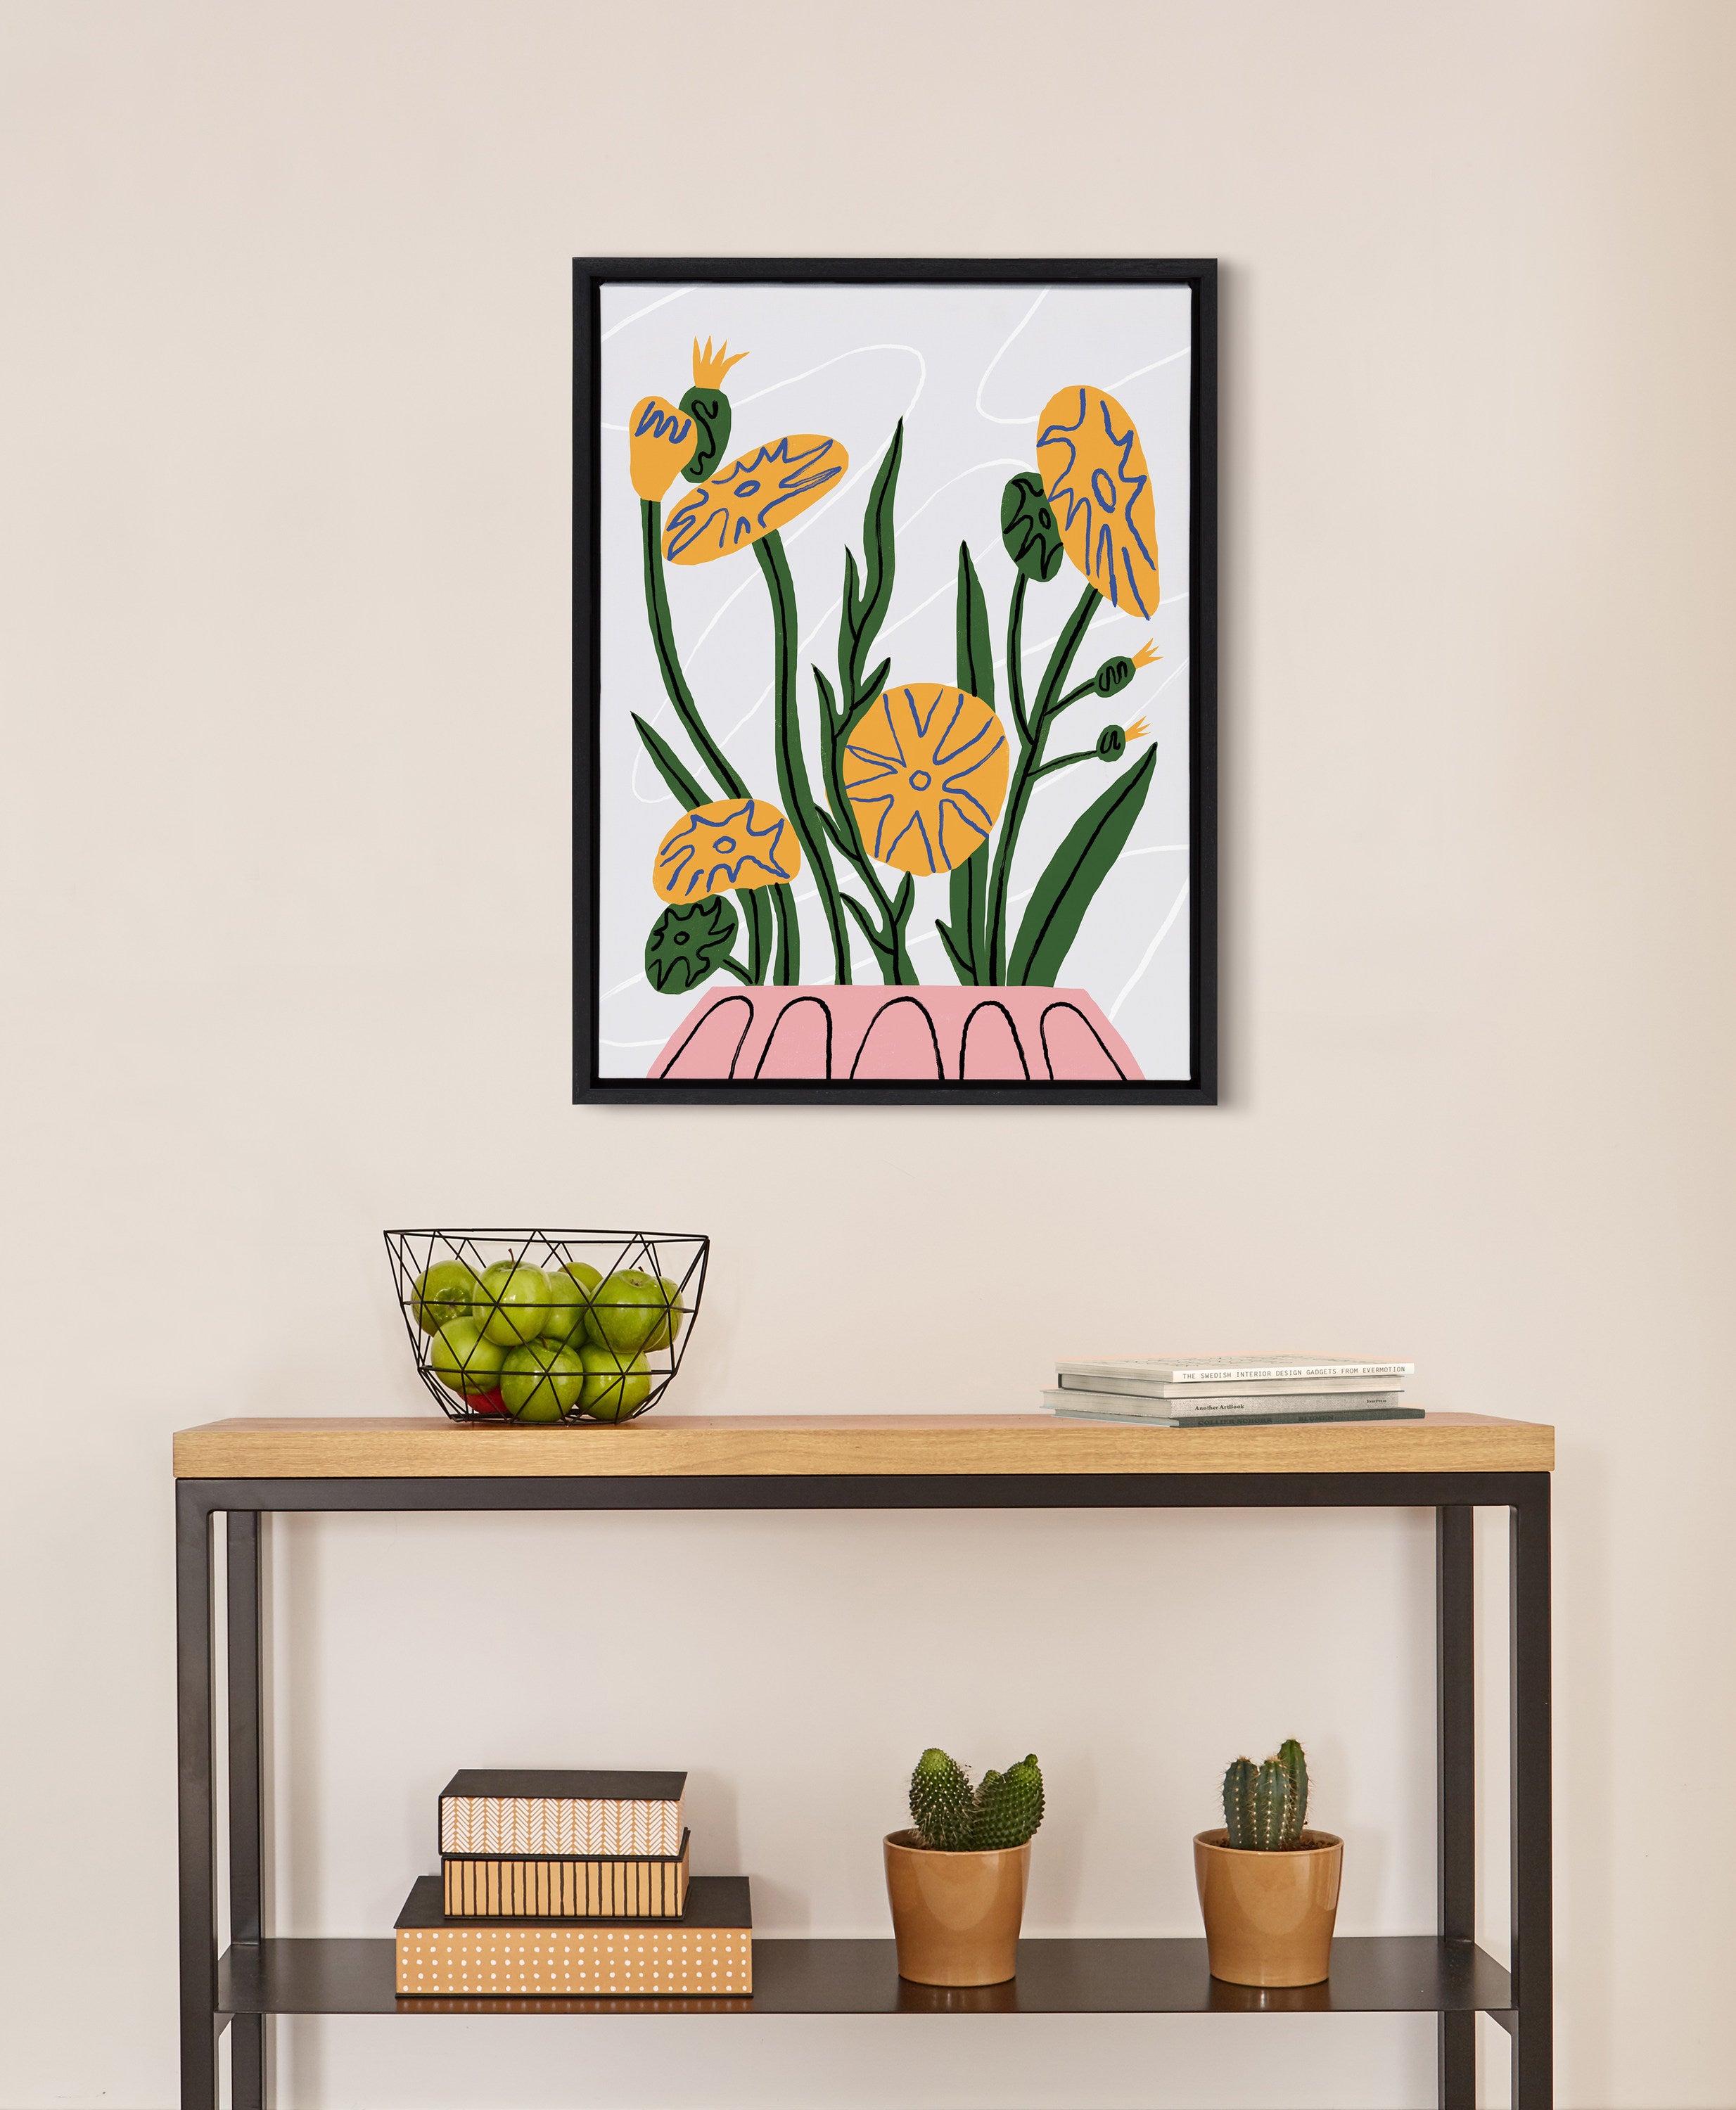 Sylvie MV Potted Plants Framed Canvas by Marcello Velho